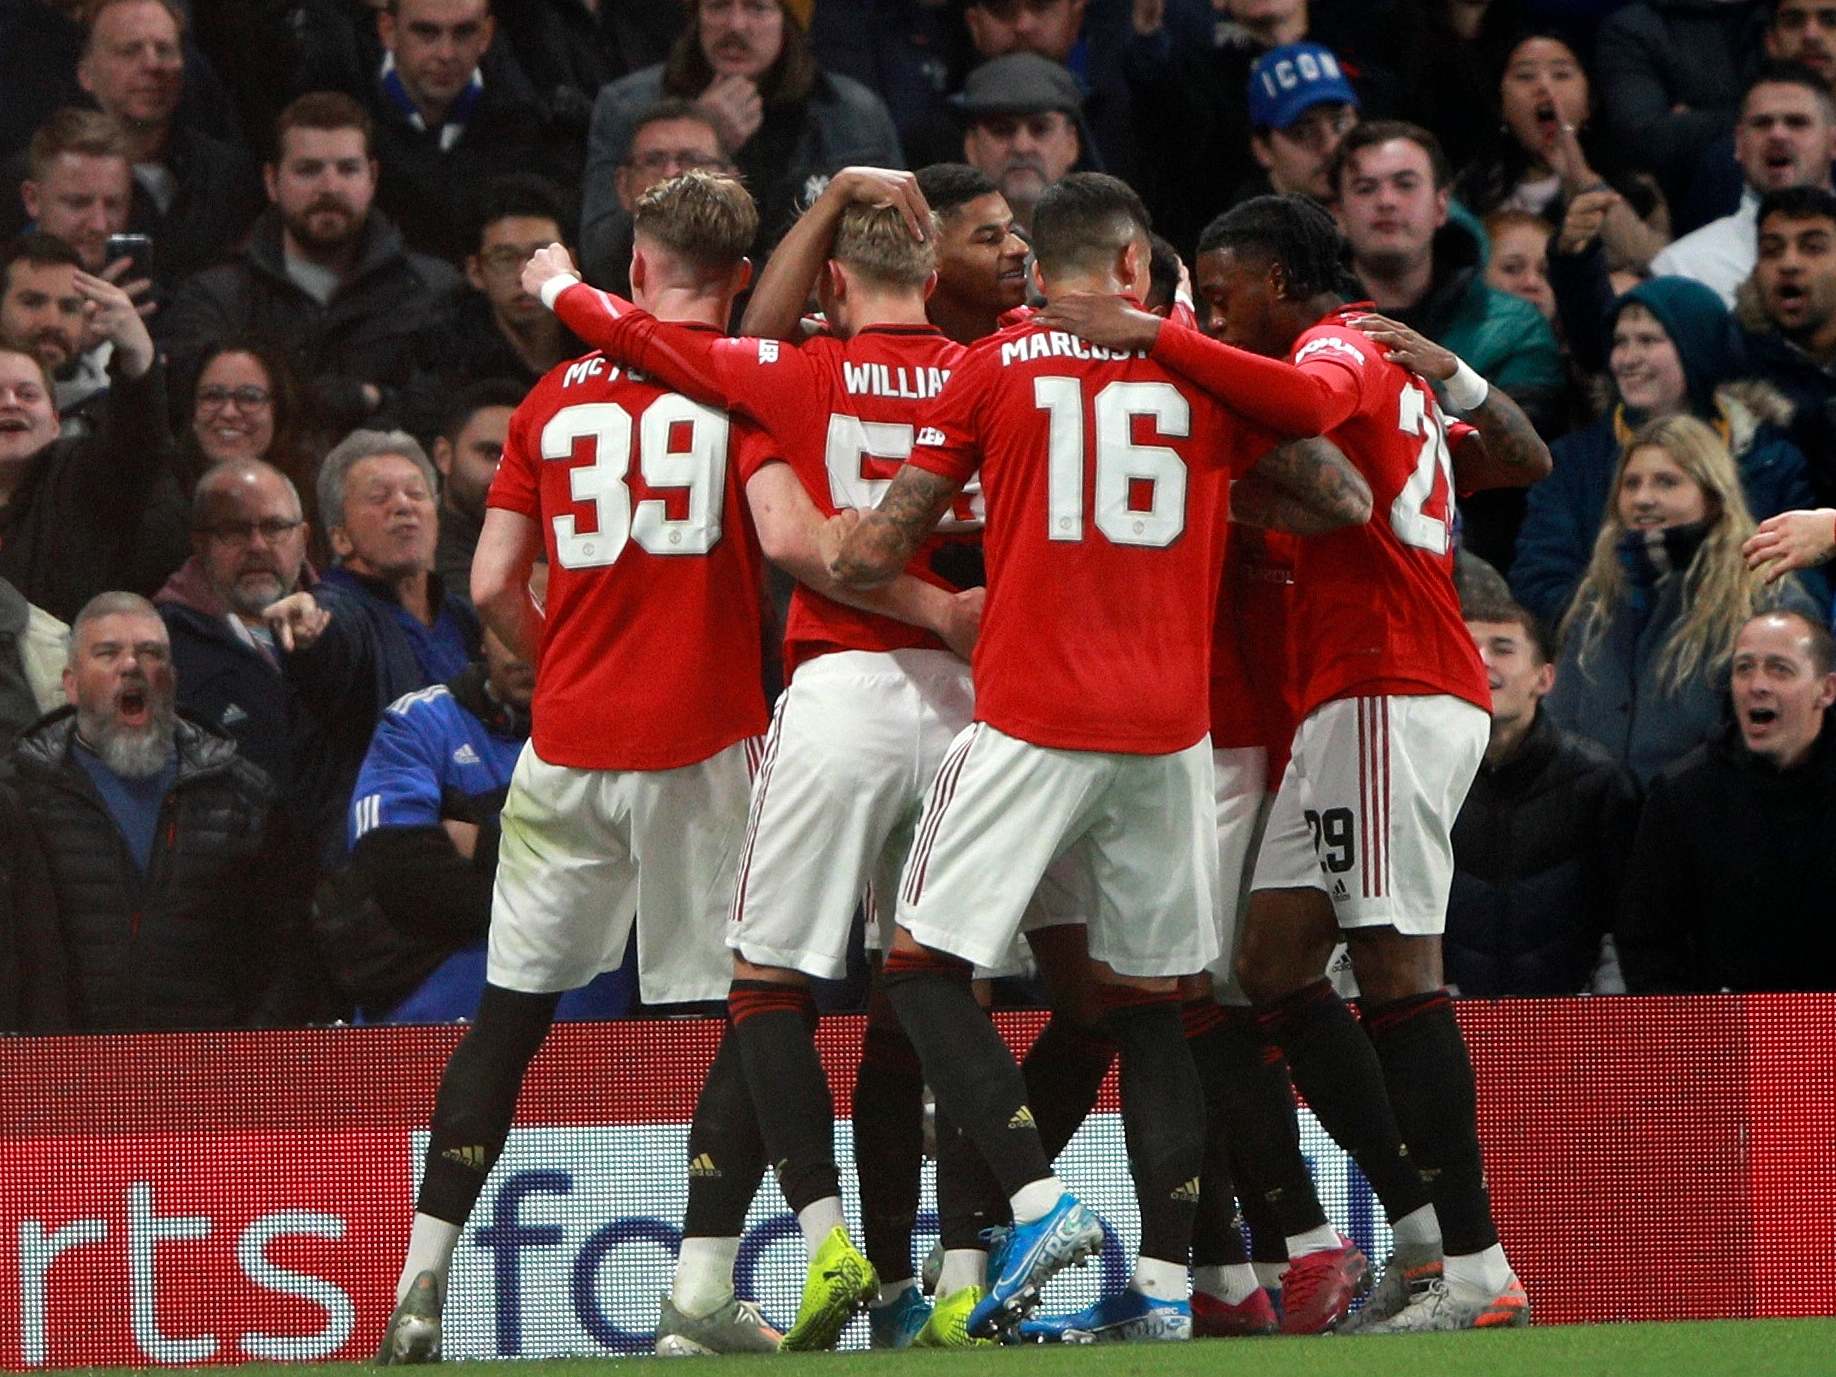 United celebrate at Stamford Bridge